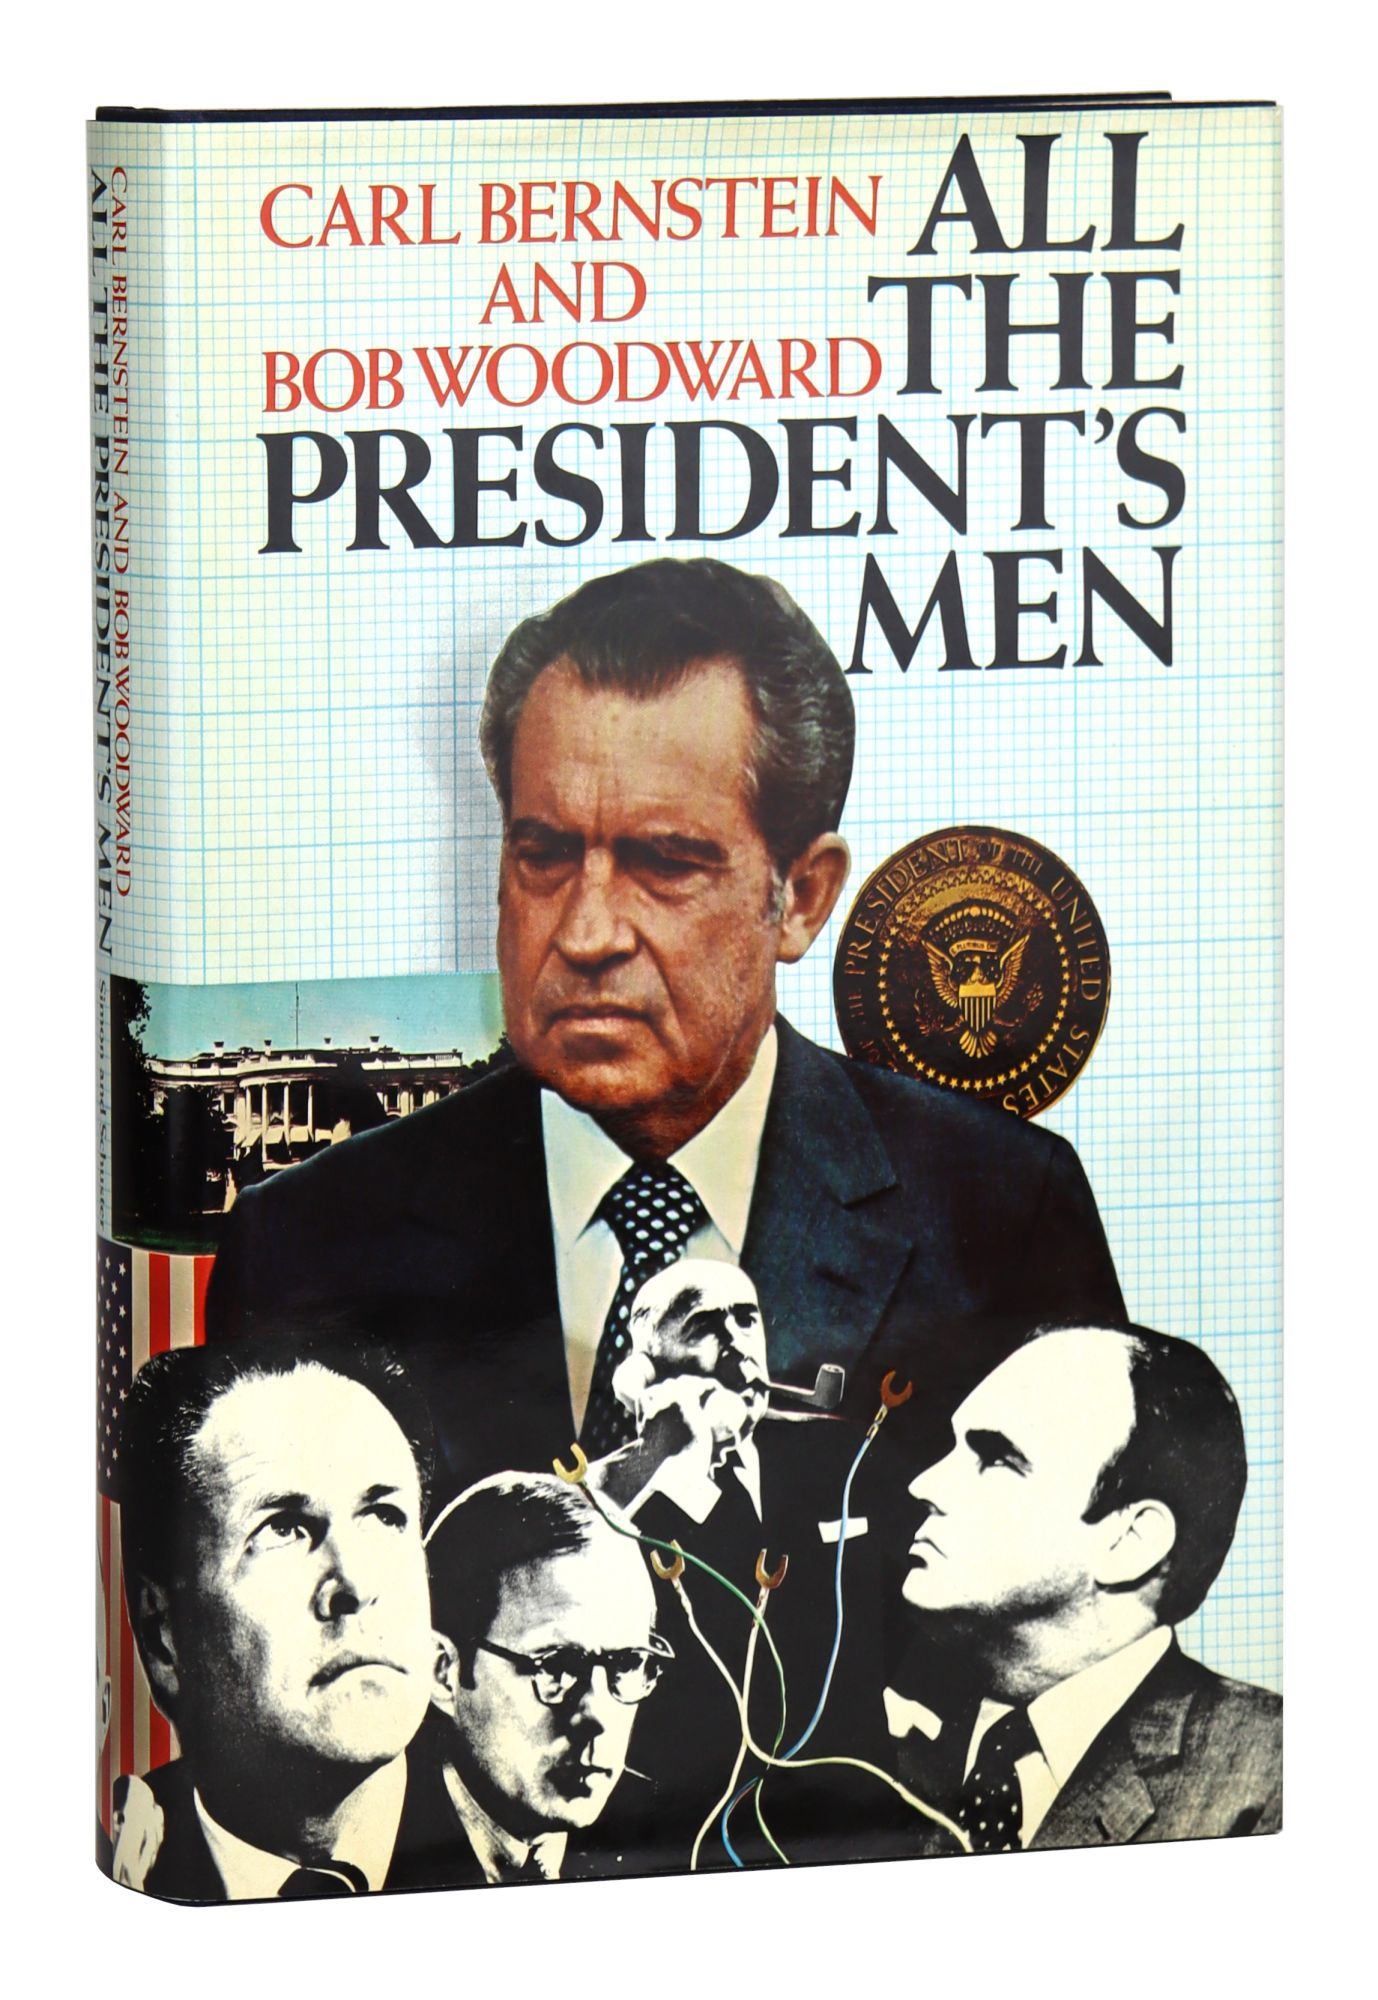 All the Presidents Men